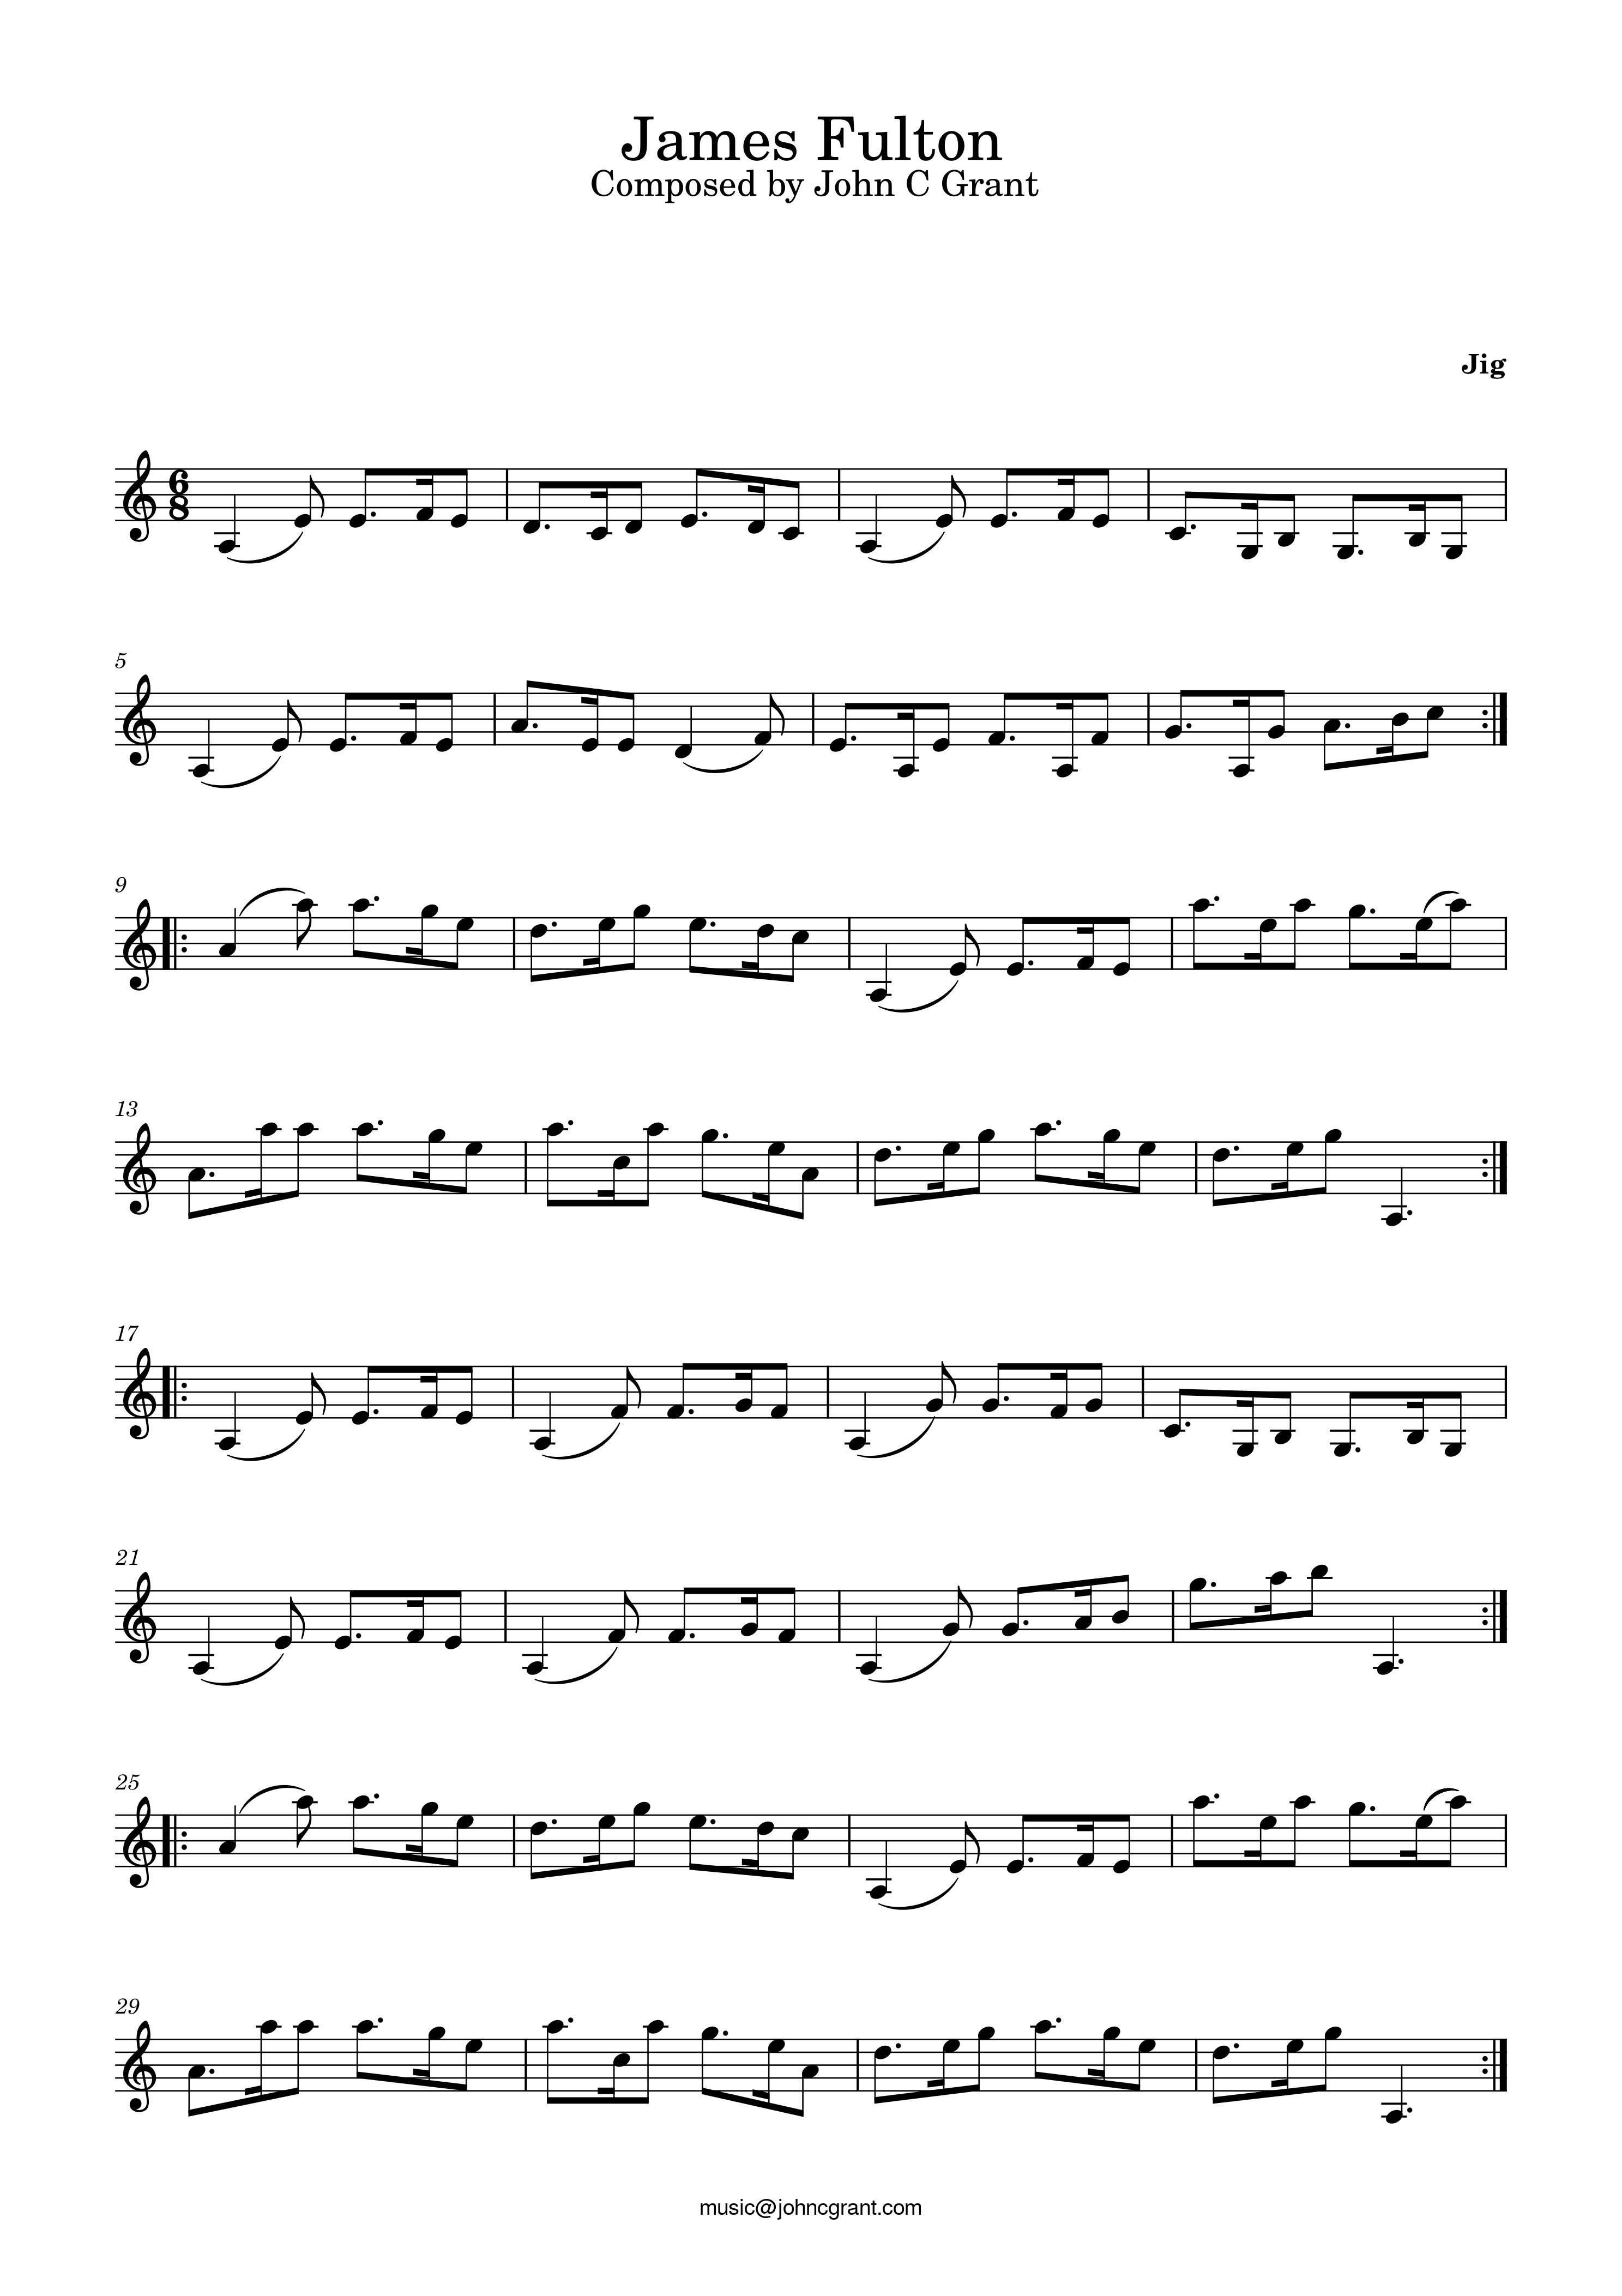 James Fulton - Composed by John C Grant (https://johncgrant.com). Traditional composer from Kilmarnock, Ayrshire, Scotland.